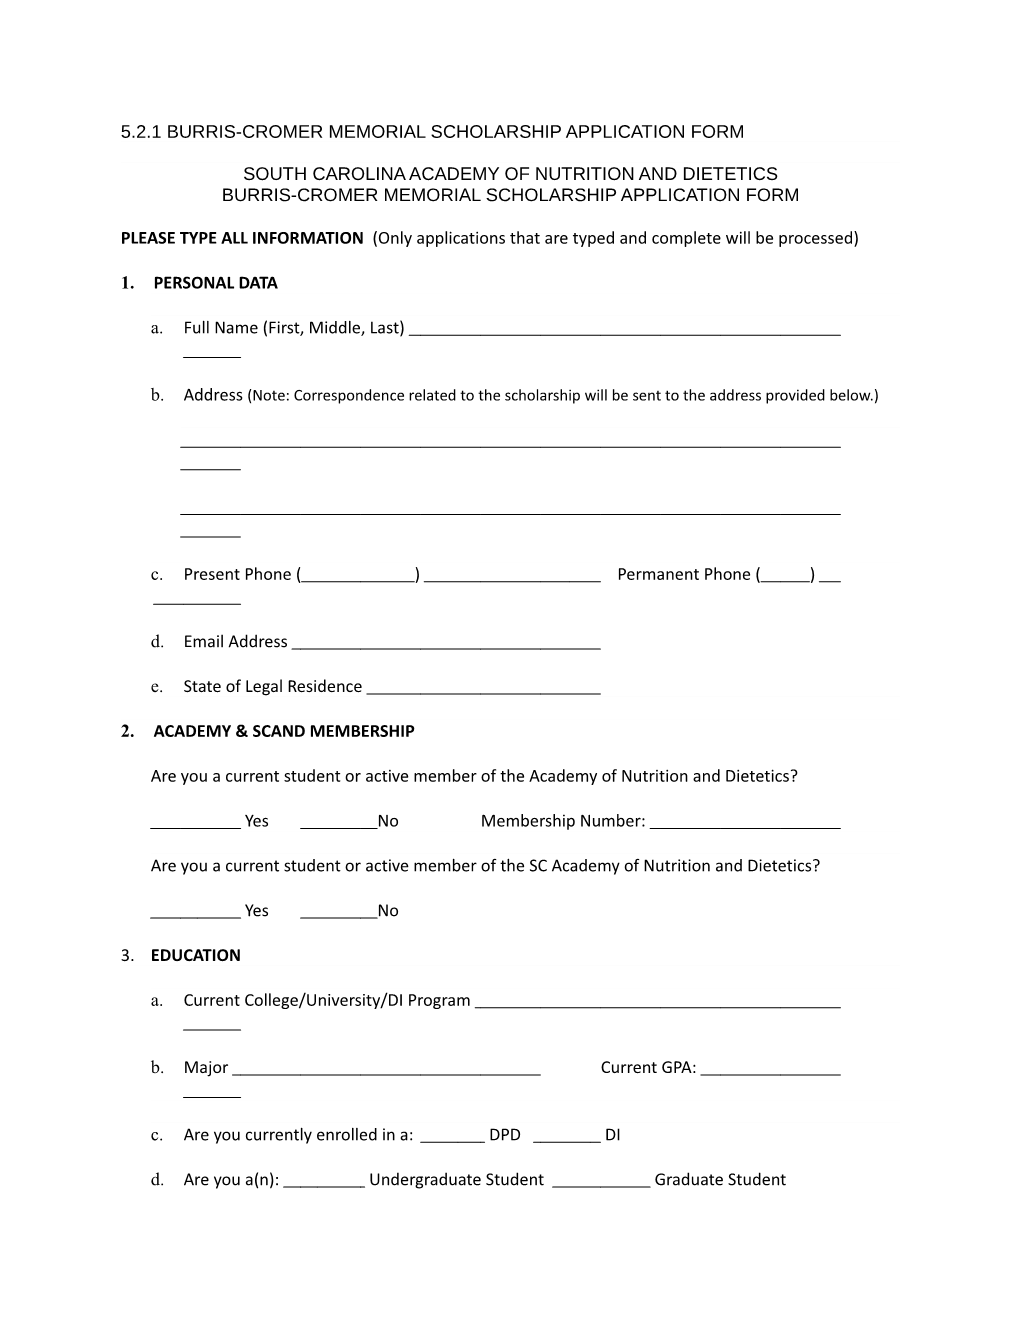 5.2.1 Burris-Cromer Memorial Scholarship Application Form